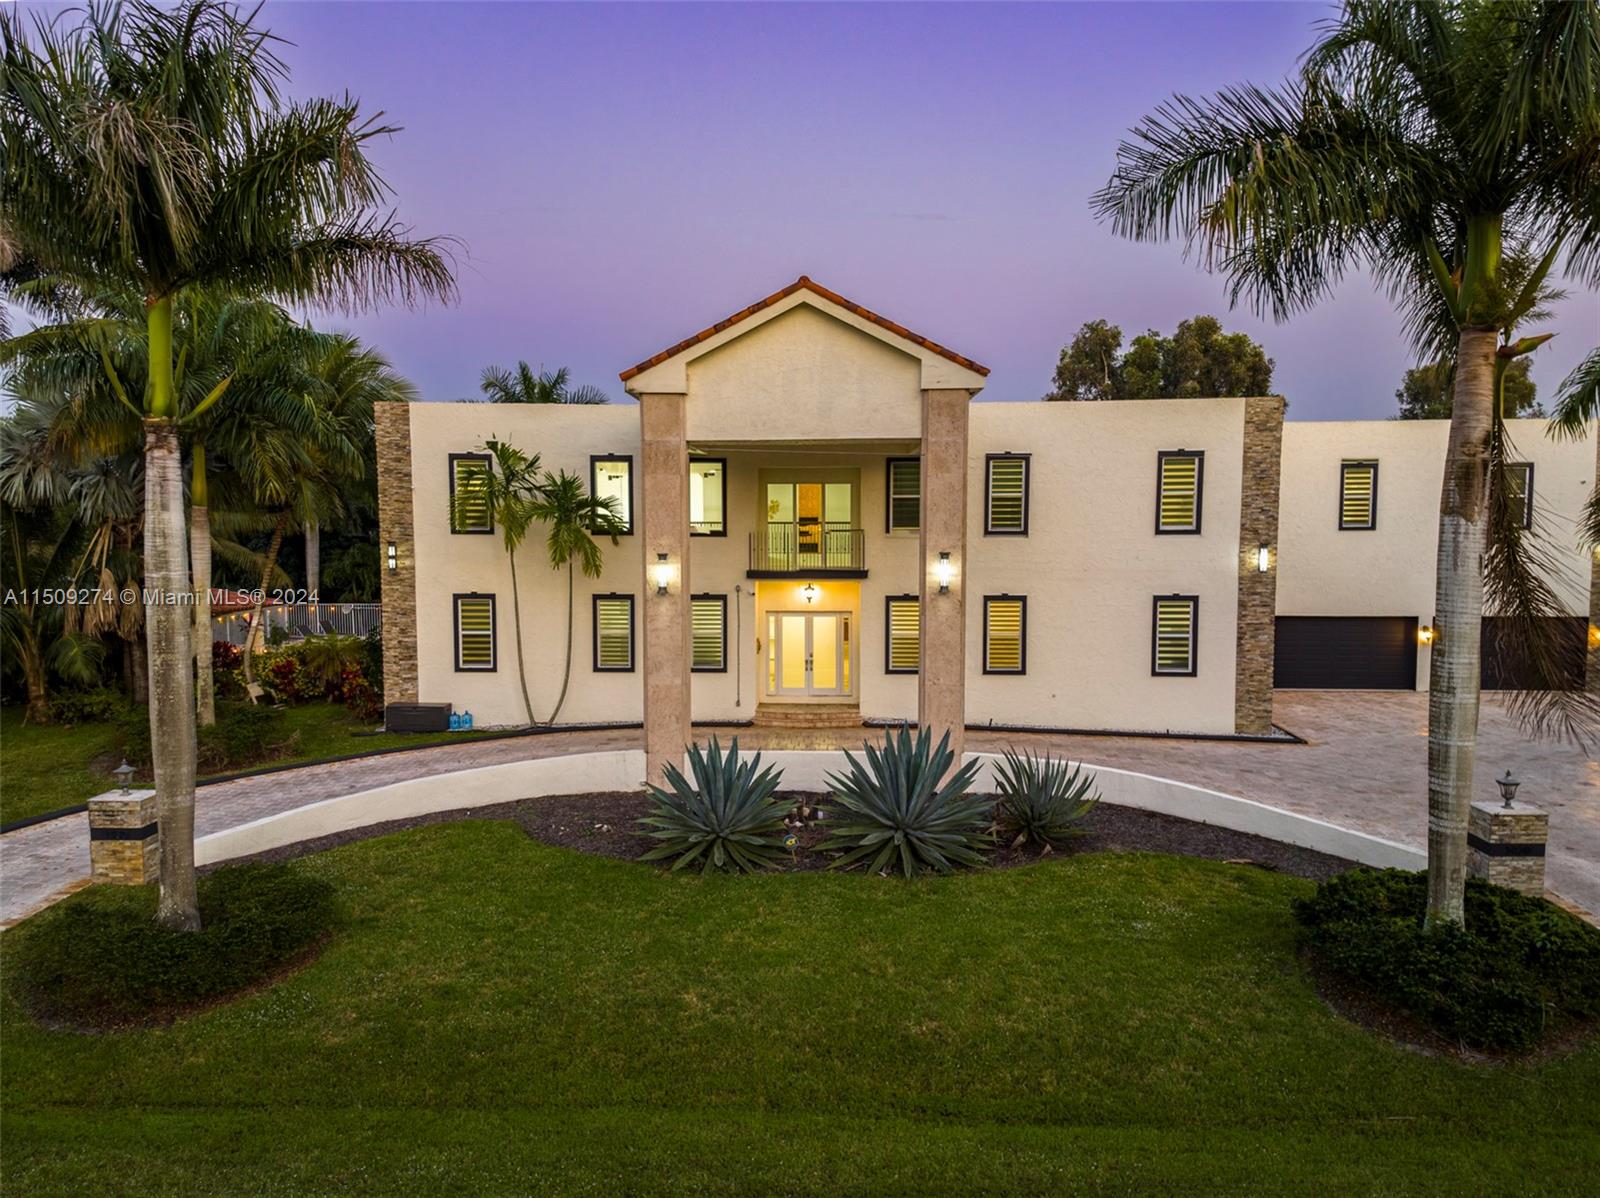 Rental Property at 1430 Nw 114th Ave, Plantation, Miami-Dade County, Florida - Bedrooms: 9 
Bathrooms: 8  - $20,995 MO.